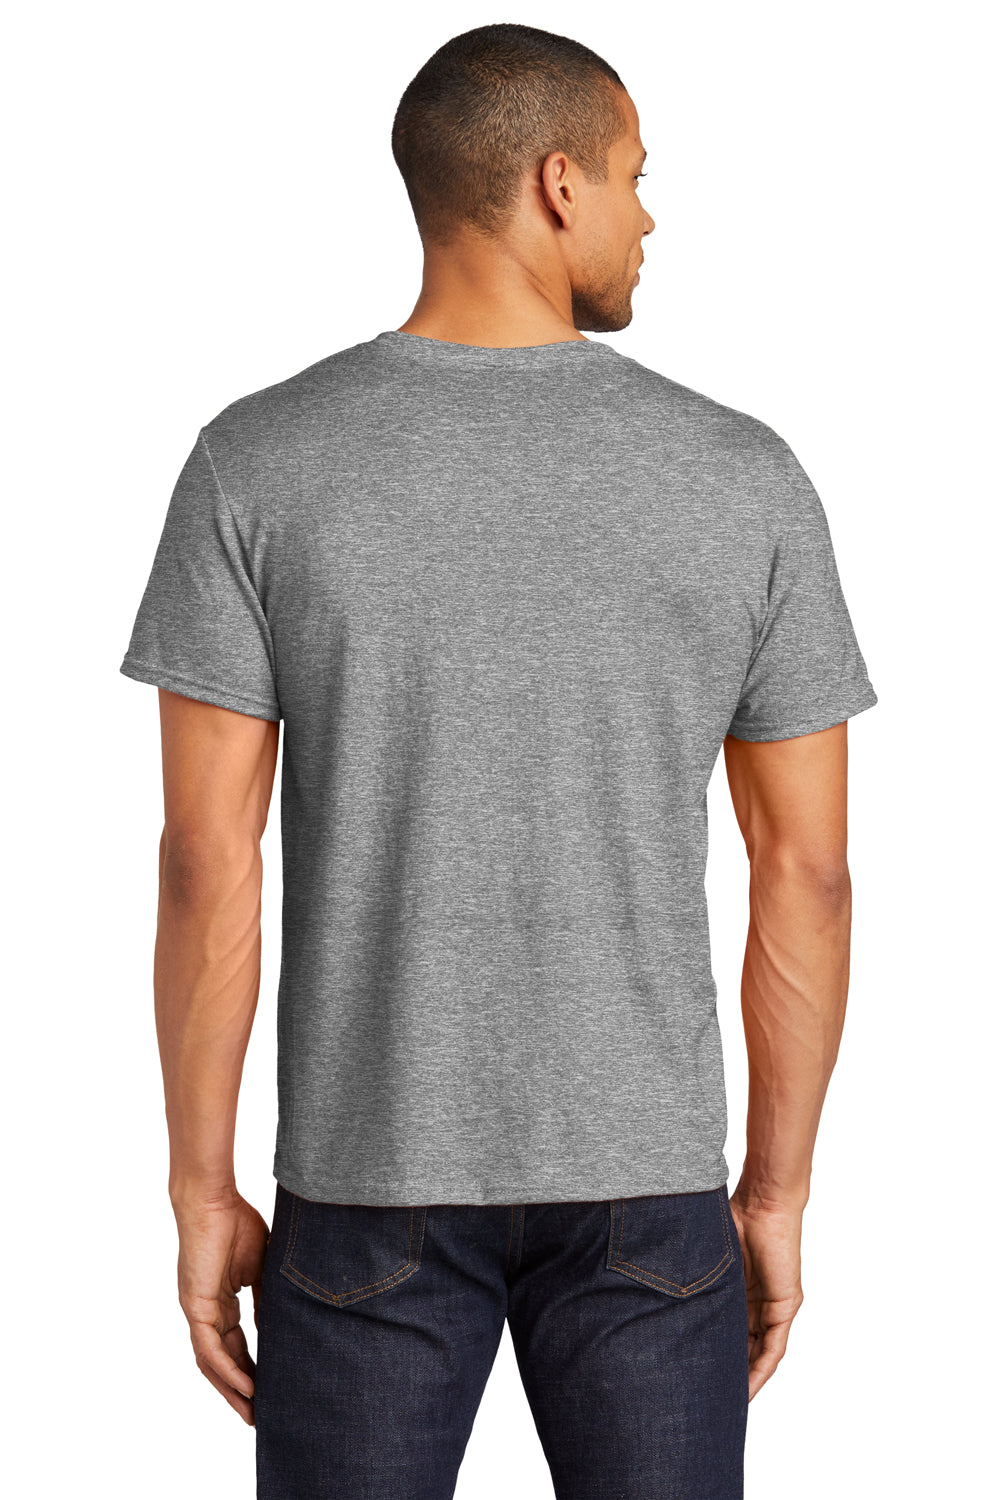 Jerzees 560M Mens Premium Blend Ring Spun Short Sleeve Crewneck T-Shirt Oxford Grey Back